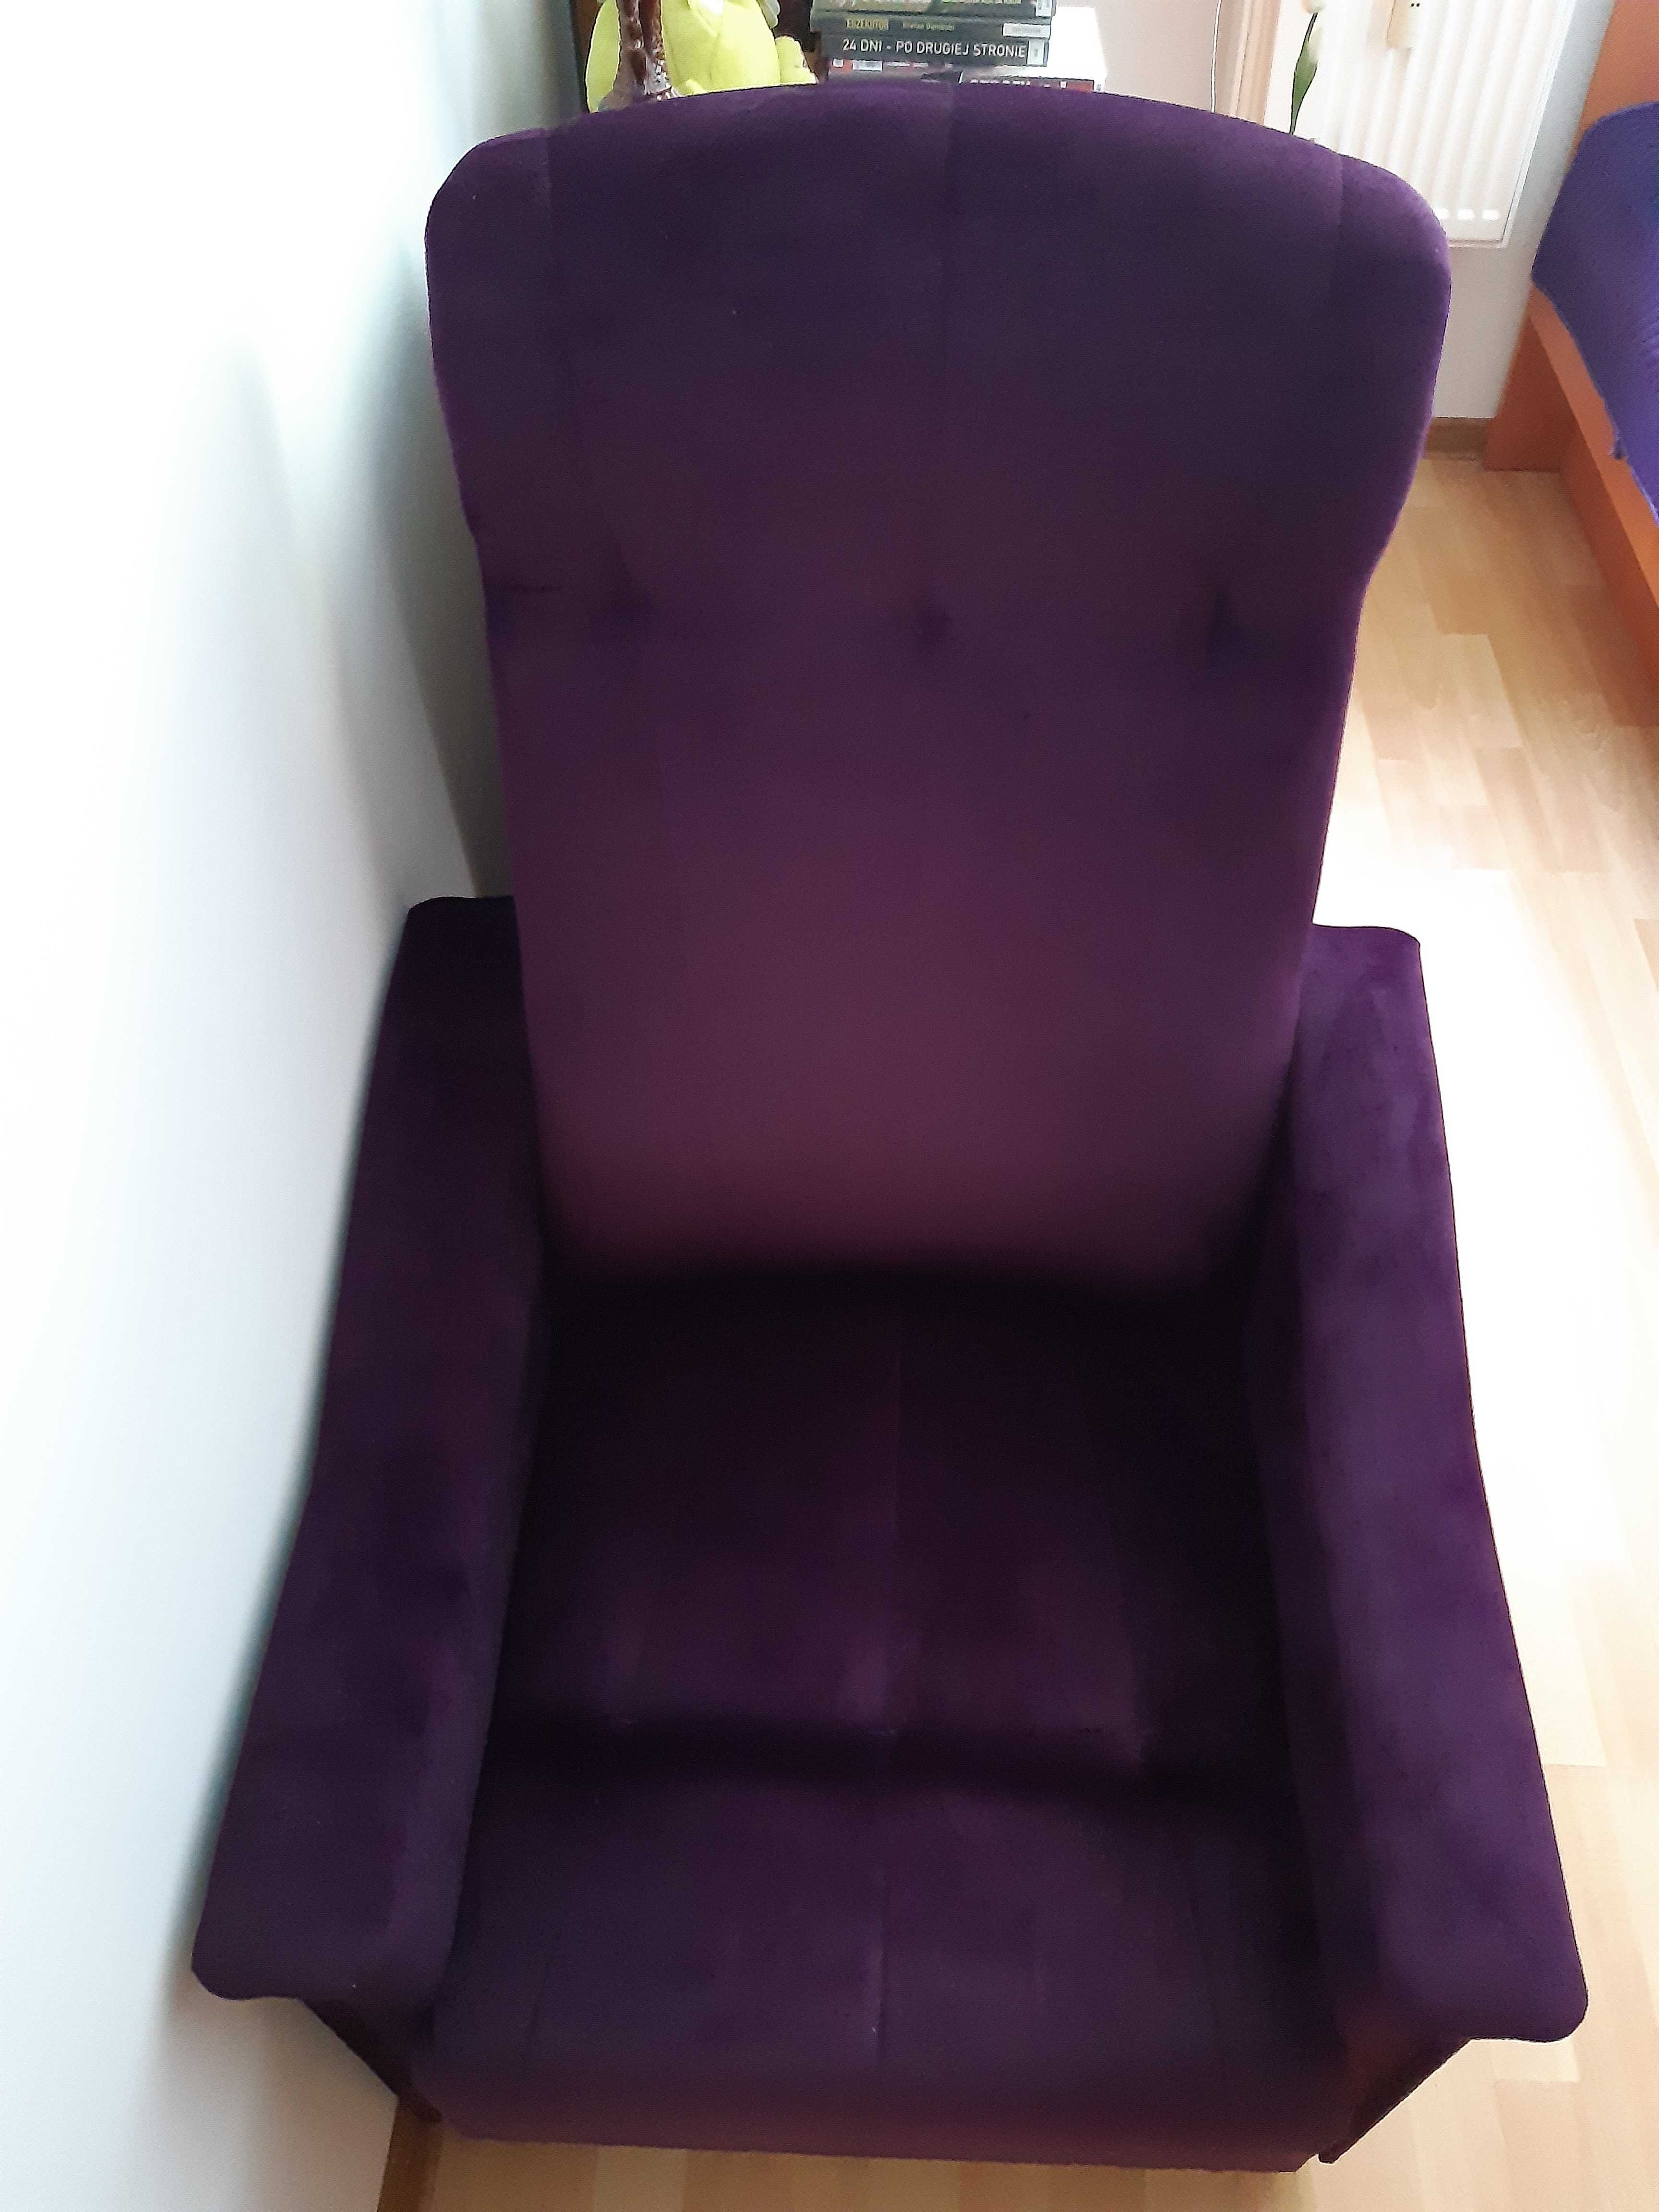 Fotel uszak fioletowy nowy